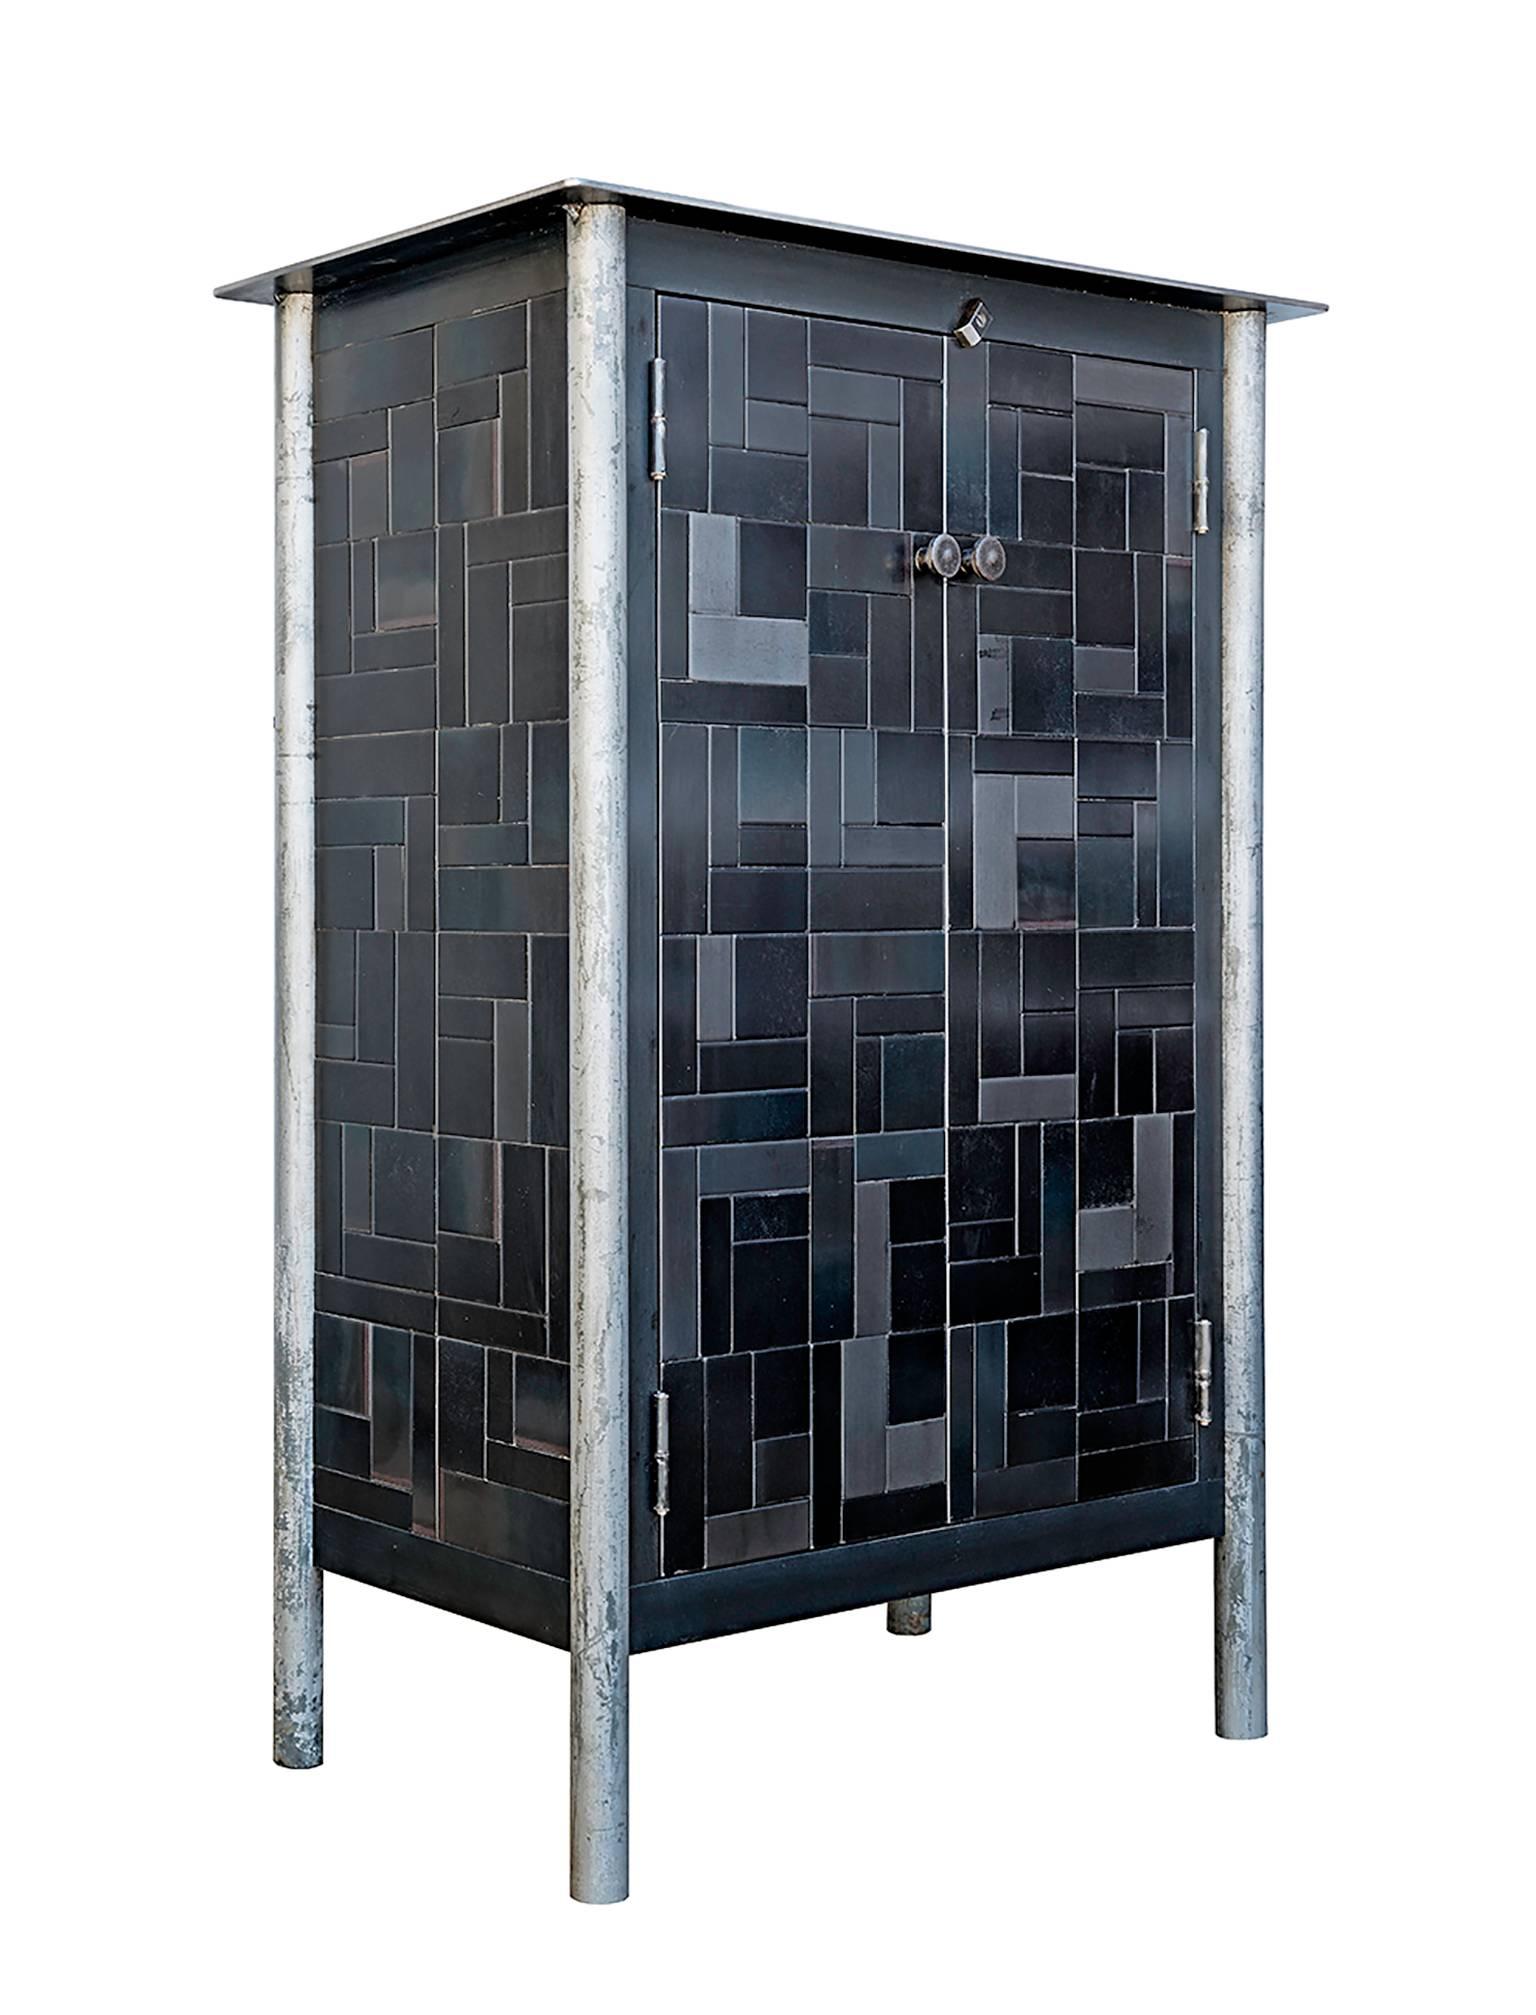 Half Housetop Quilt Cupboard - Steel Furniture - Art by Jim Rose